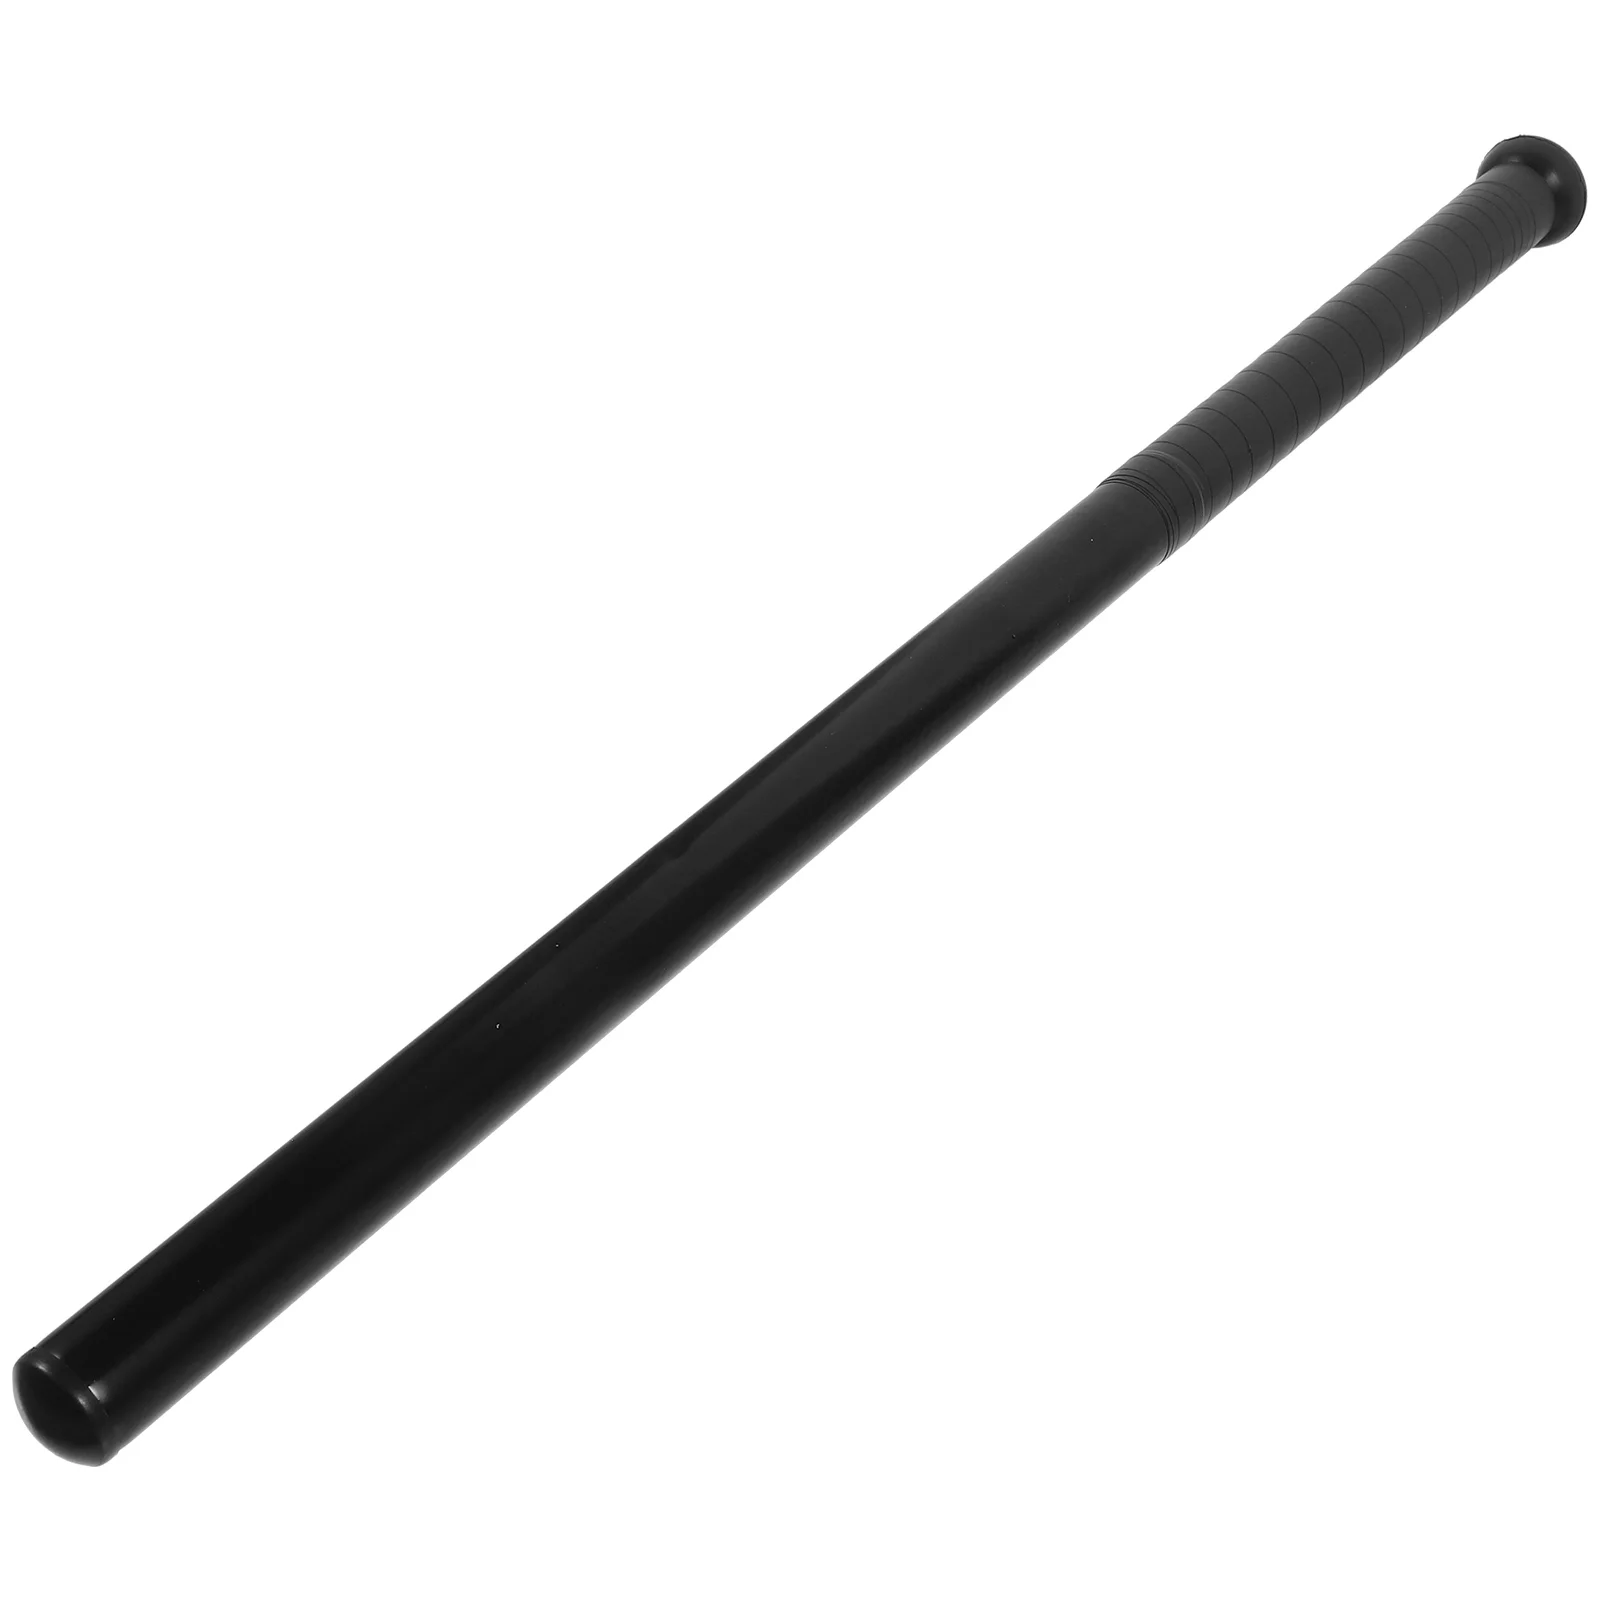 

Bat Baseball Bats Portable Sports Training Stainless Steel Stick Lightweight for